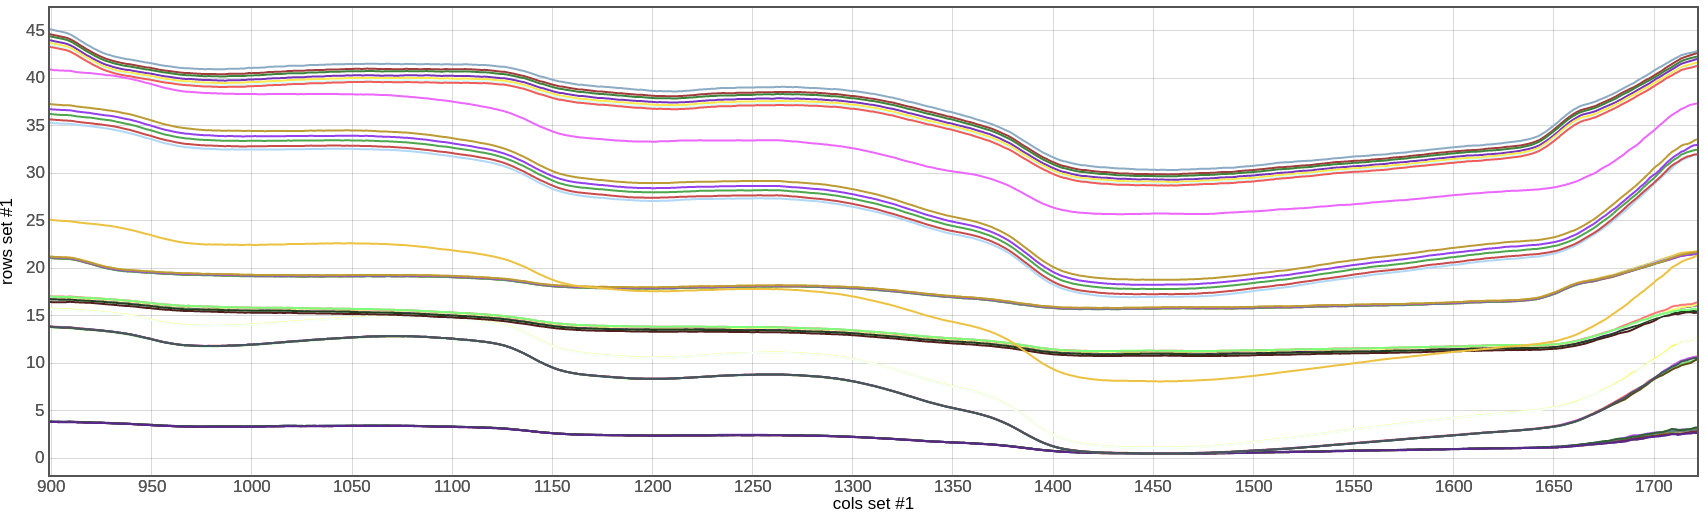 series 2 NIR. NIR spectra of kidney samples from 3 patients: 191, 194, and 198.  